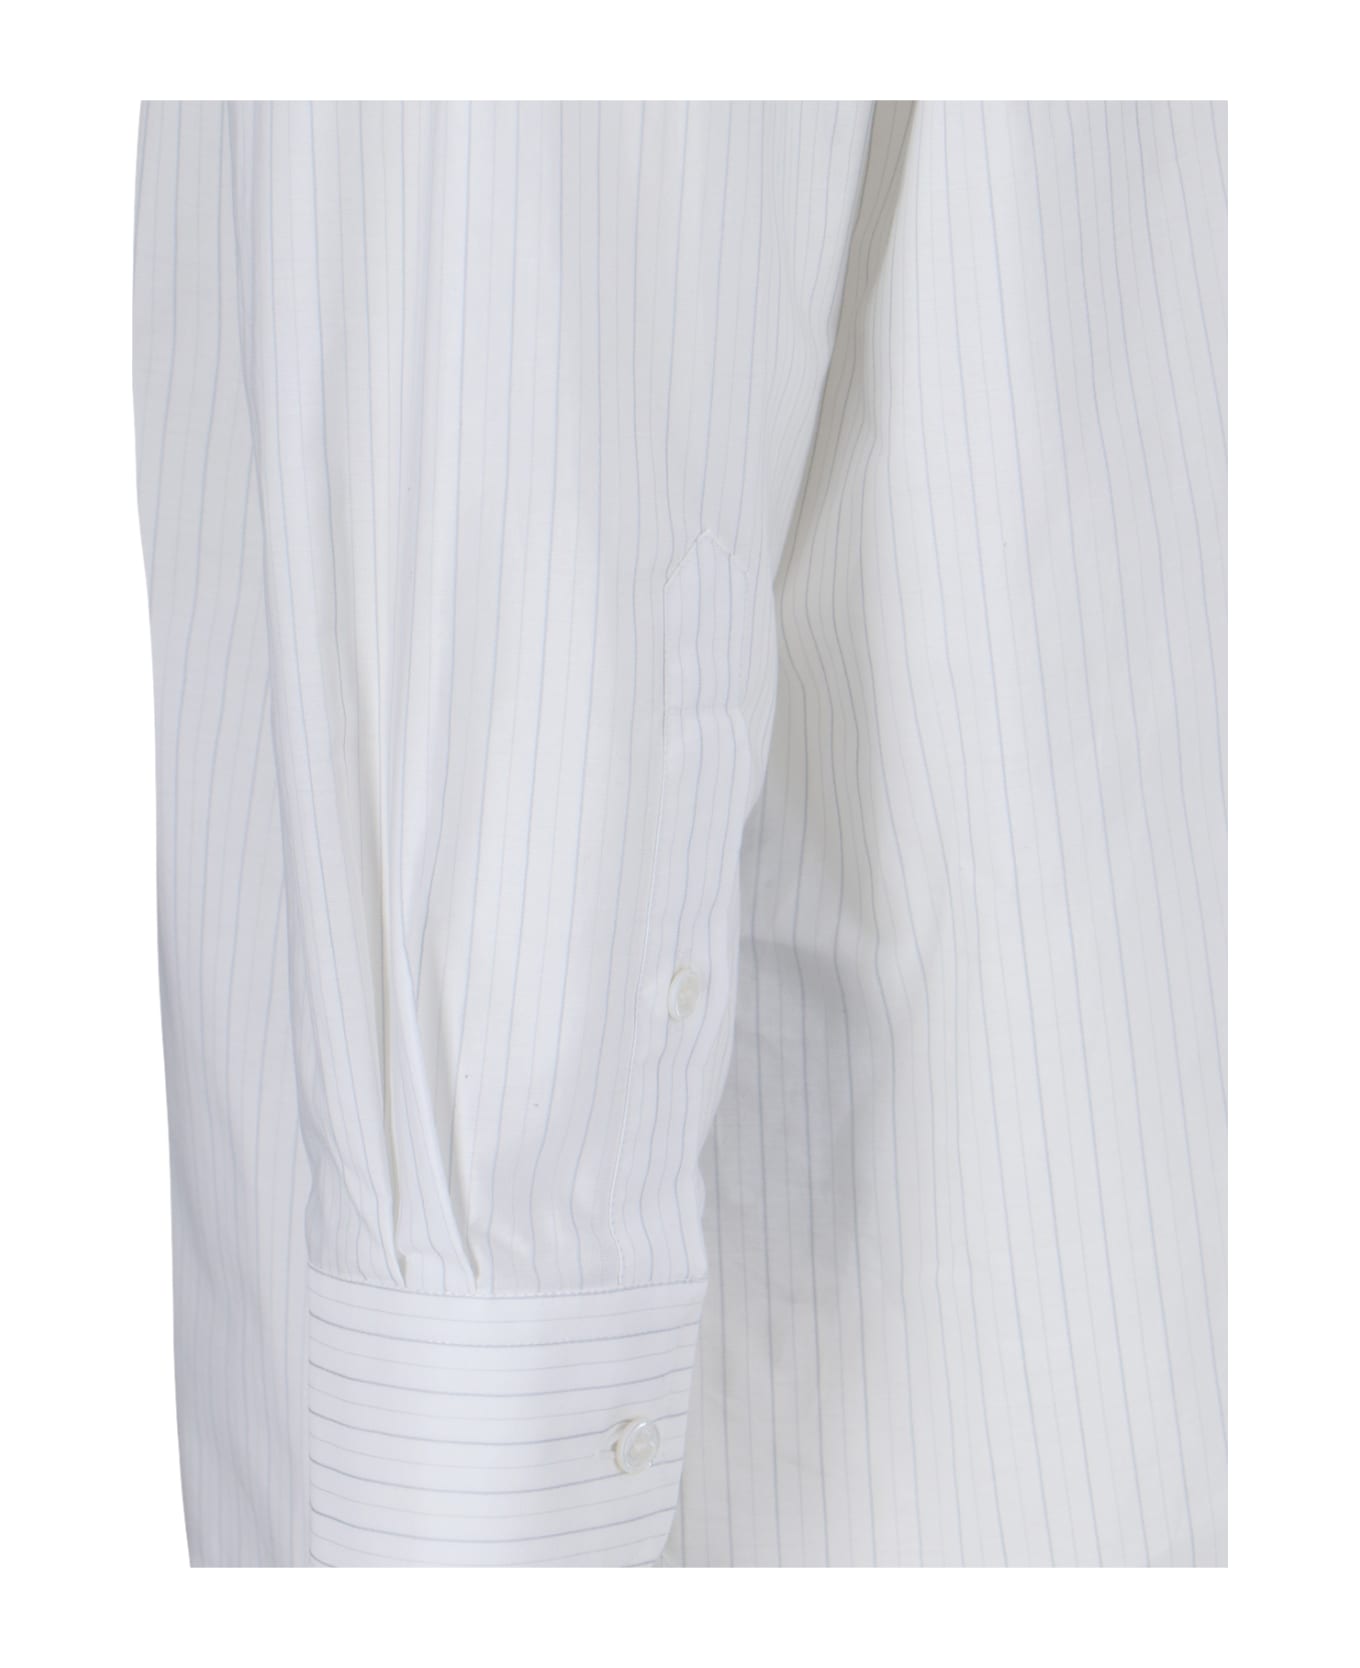 MM6 Maison Margiela Patchwork Shirt - White